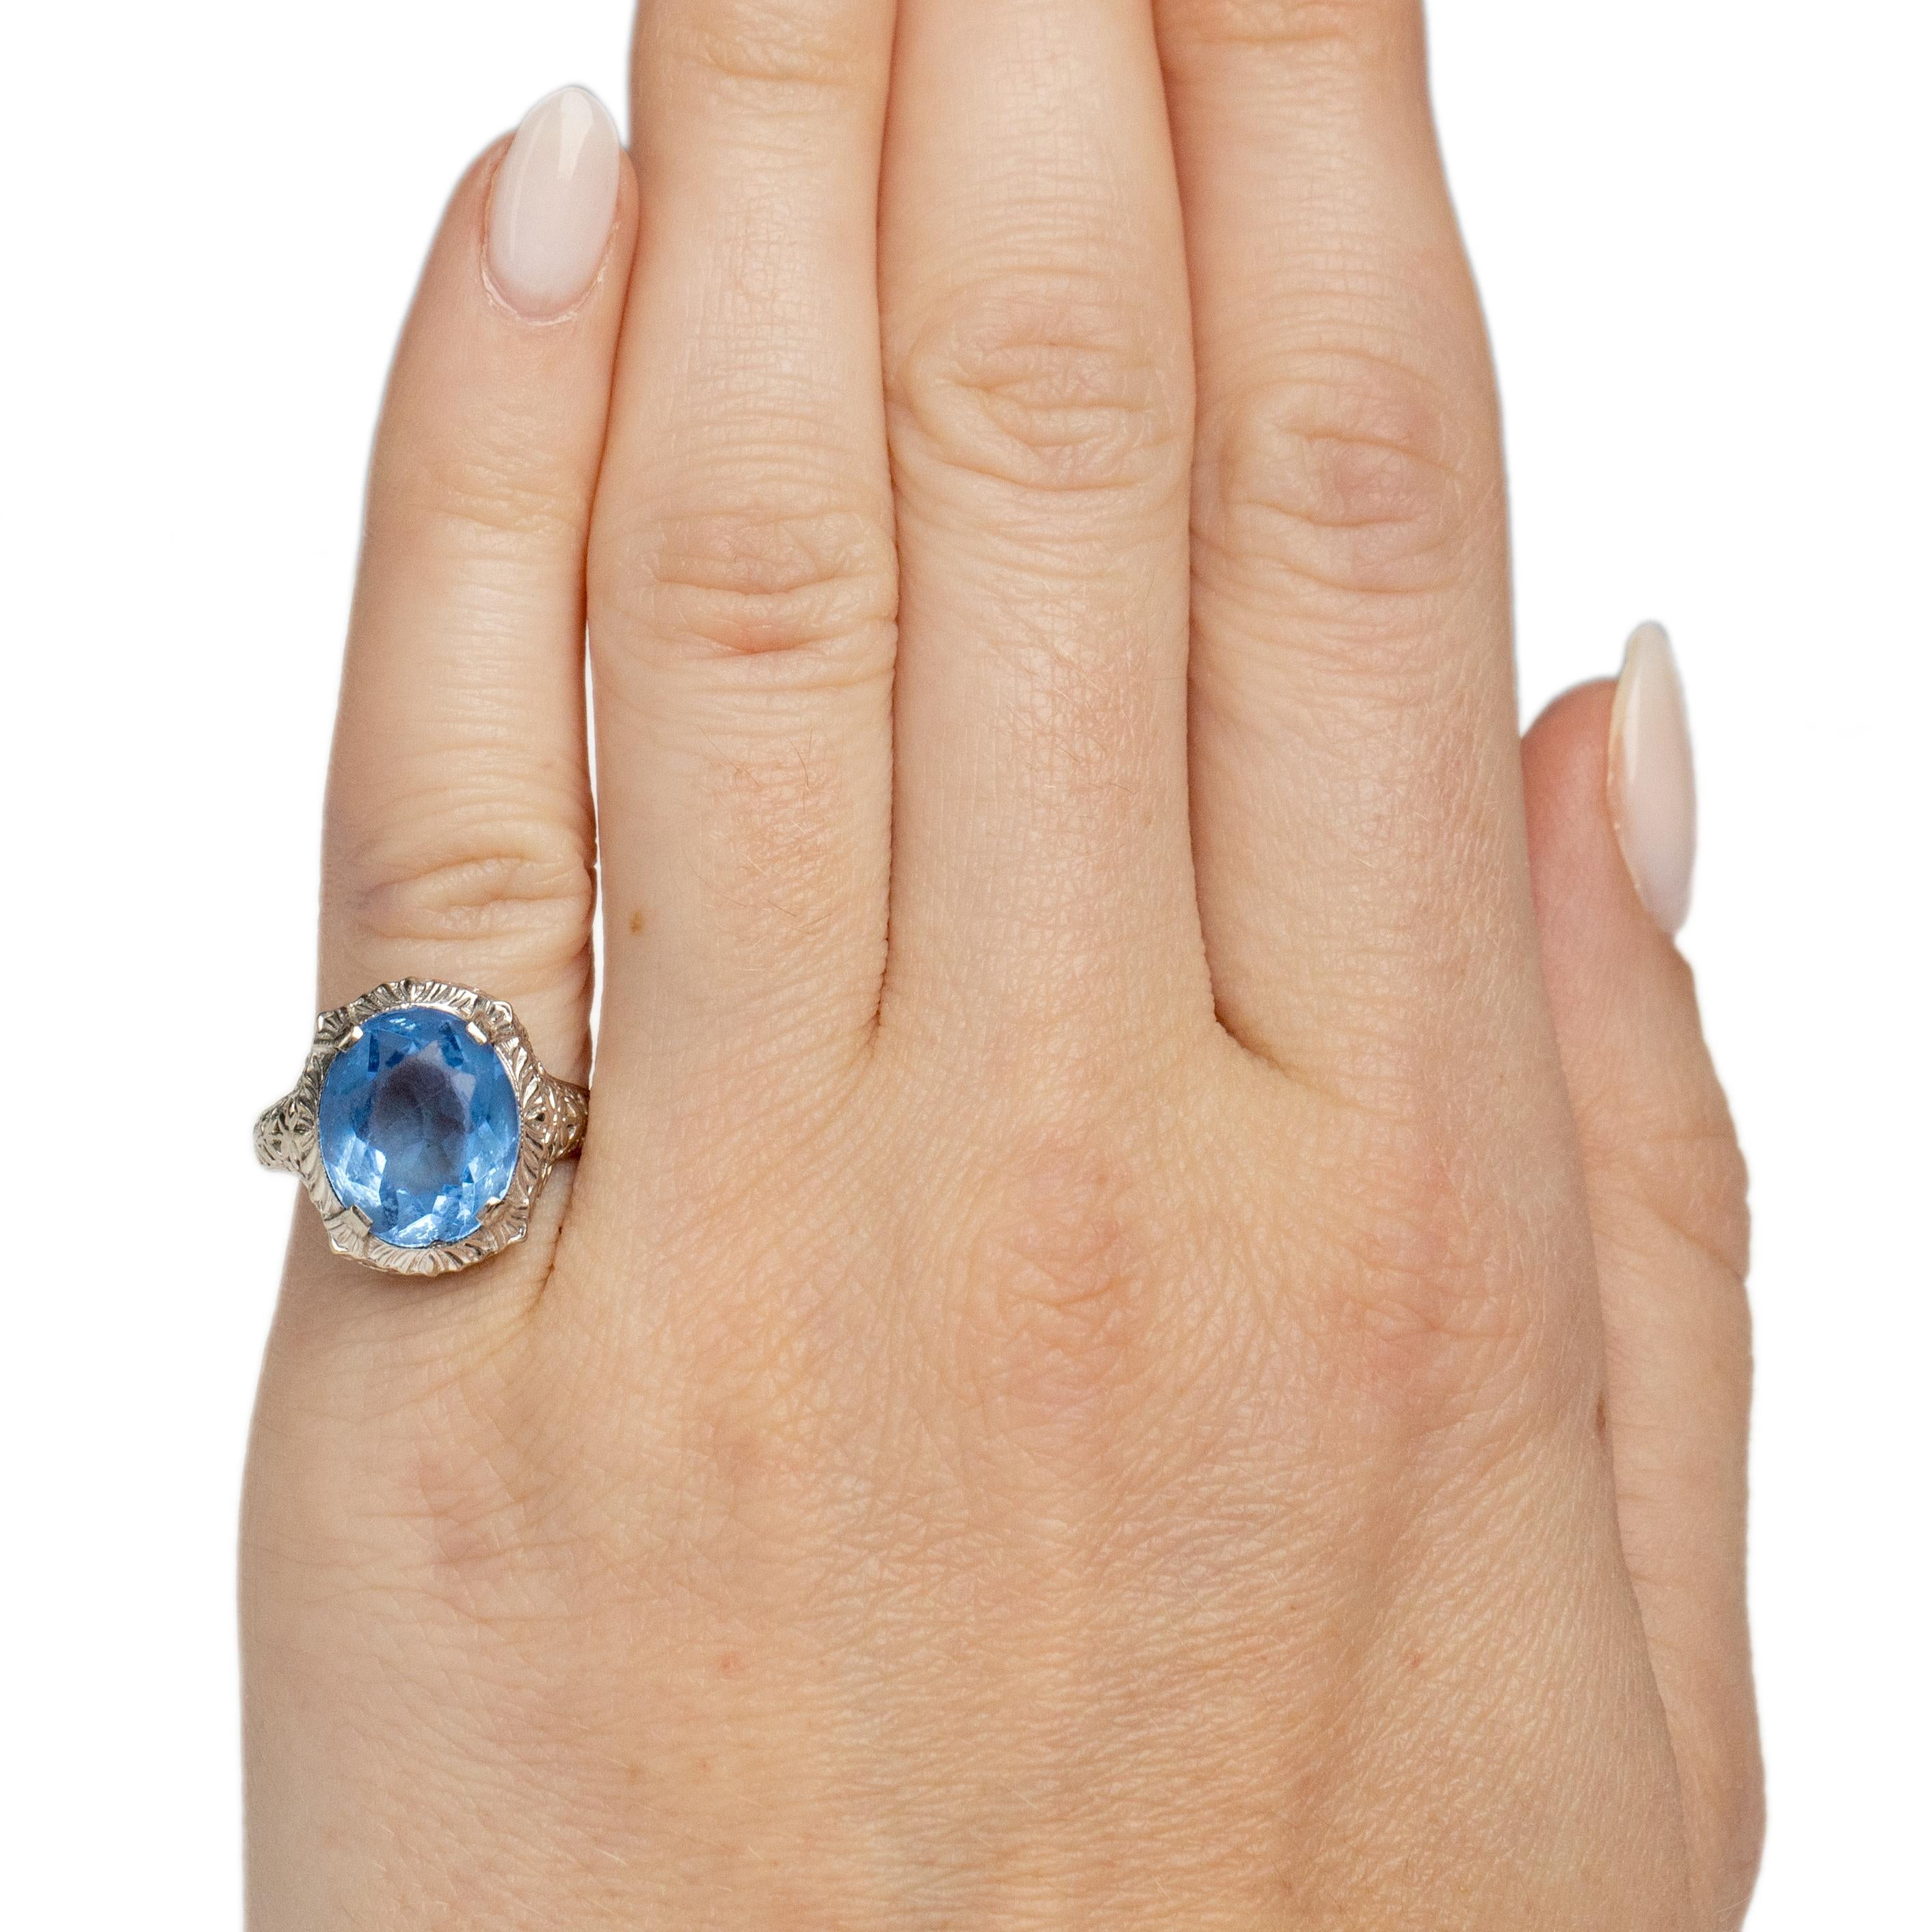 Women's Circa 1920's 10K White Gold Vintage Filigree Blue Gem Fashion Ring